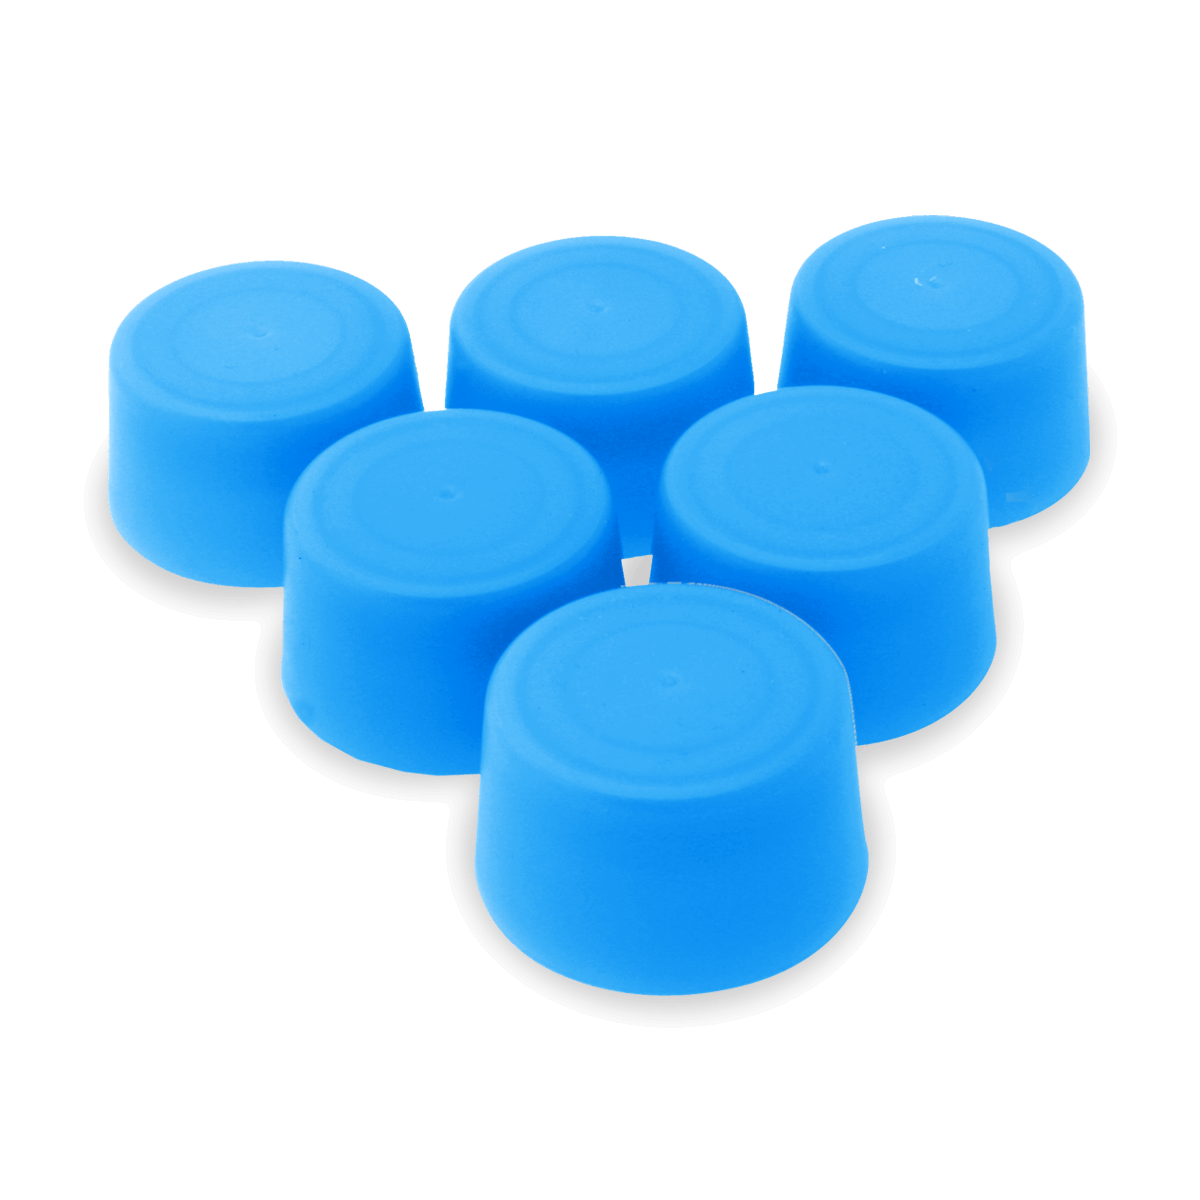 Replacement Water Bottle Caps - 6 Pack - Translucent Blue | Aquasana